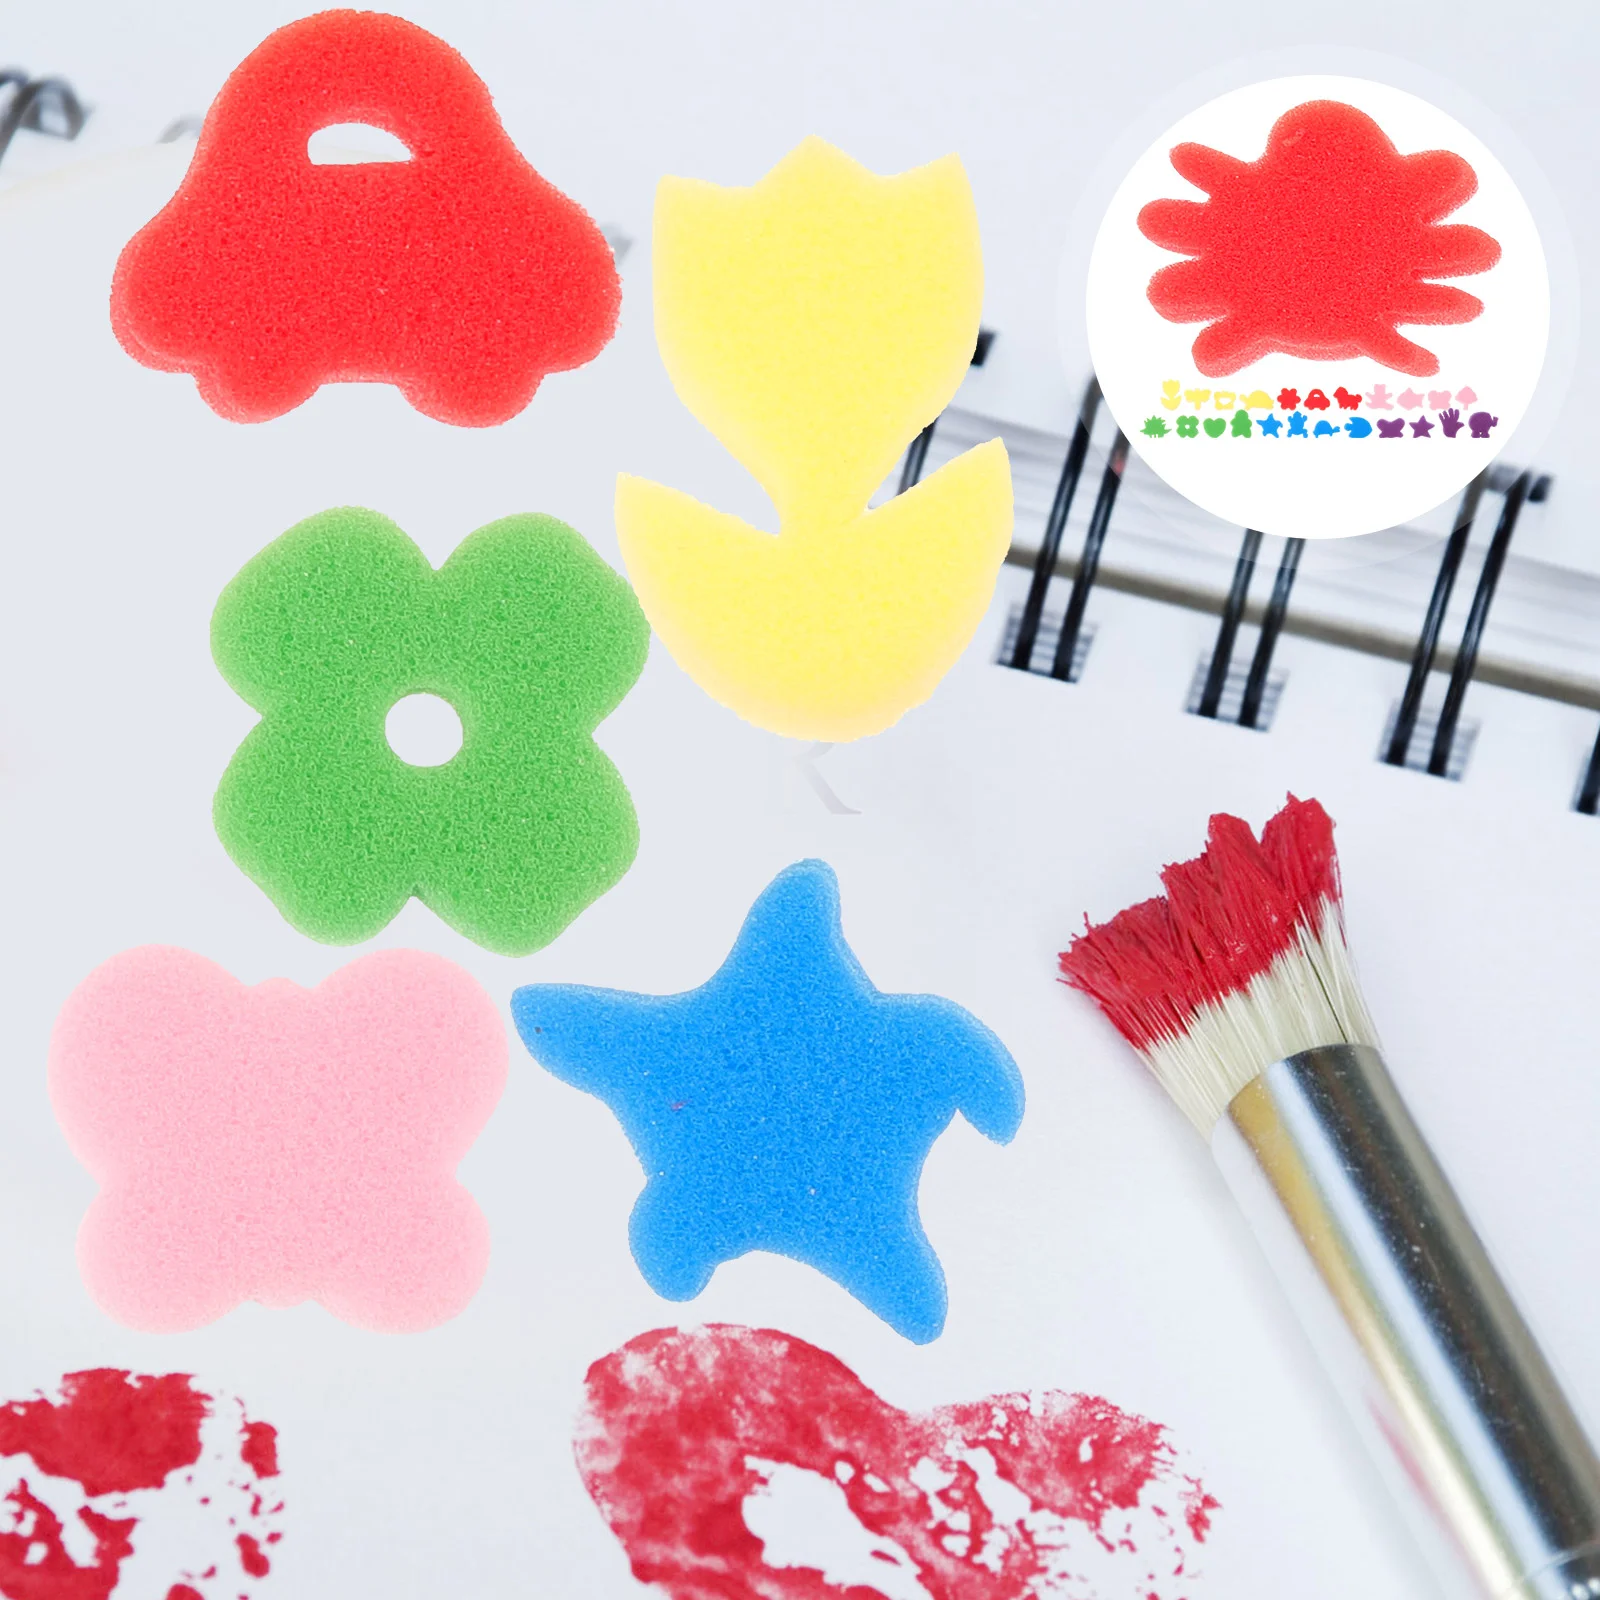 

24Pcs DIY Colorful Graffiti Sponges Painting Tools Painting Sponges Animal Shaped Assorted Pattern for Drawing Graffiti(Random